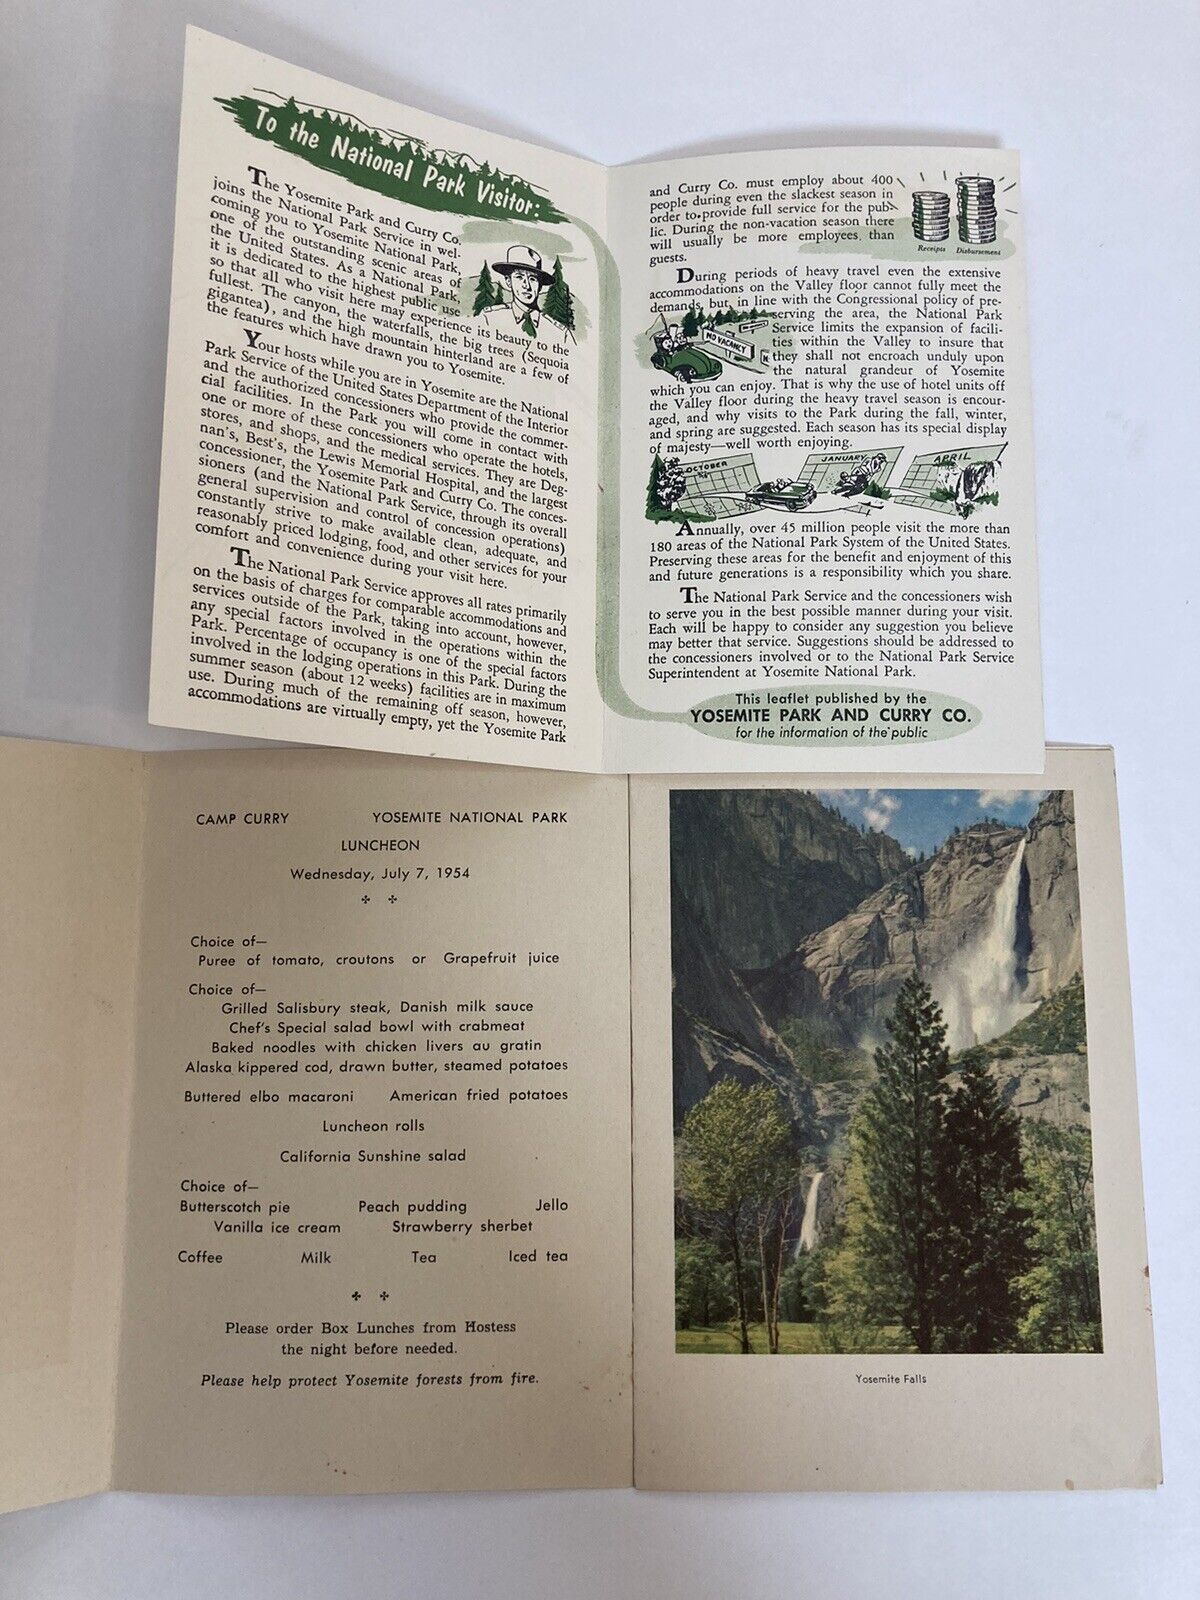 Welcome To Yosemite 1950s National Park Brochure Camp Curry Menu El Capitan 1954